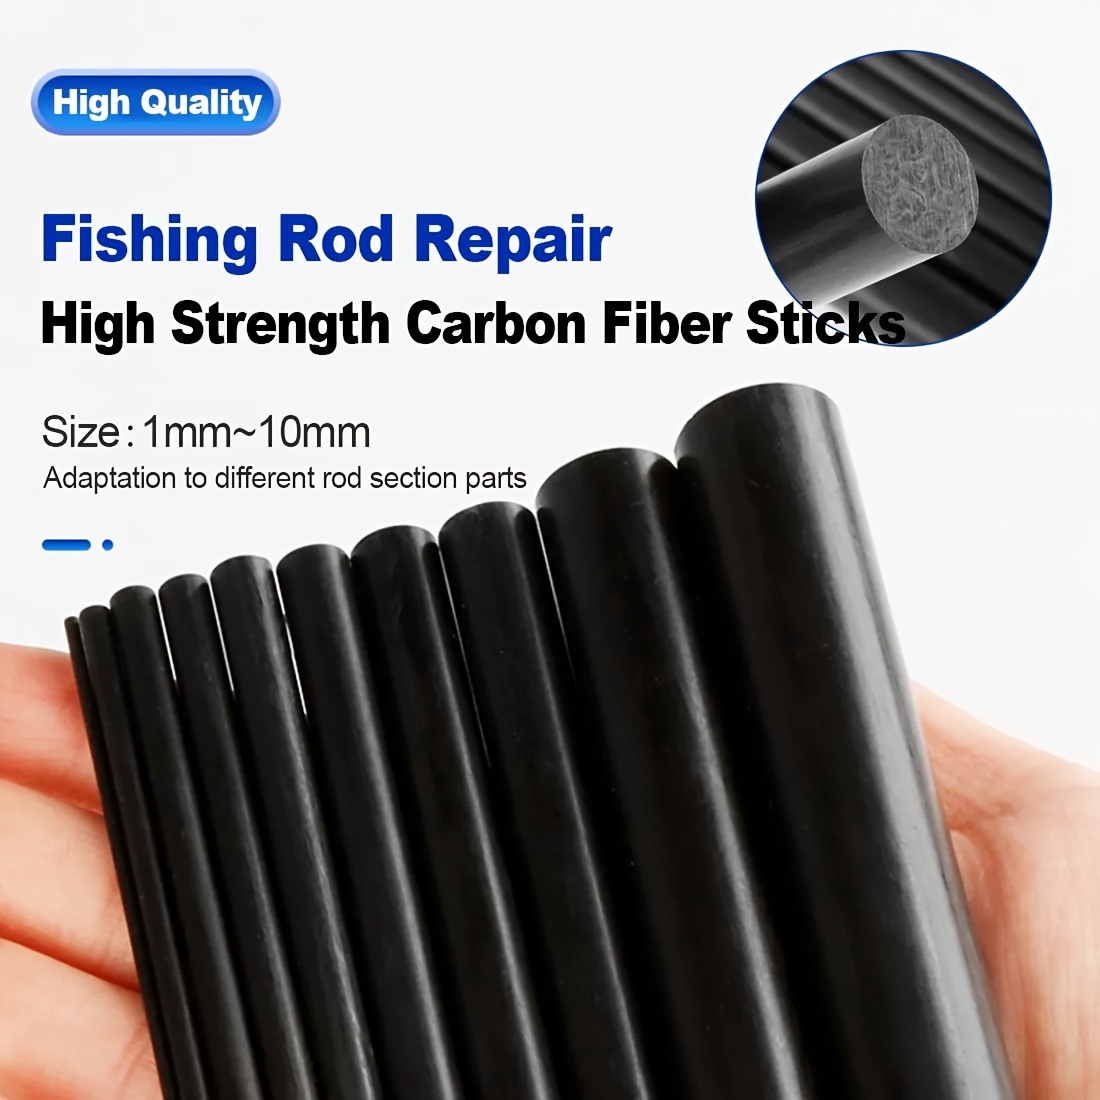 Pole Spinninggoture Fishing Rod Repair Kit - Carbon Fiber Sticks